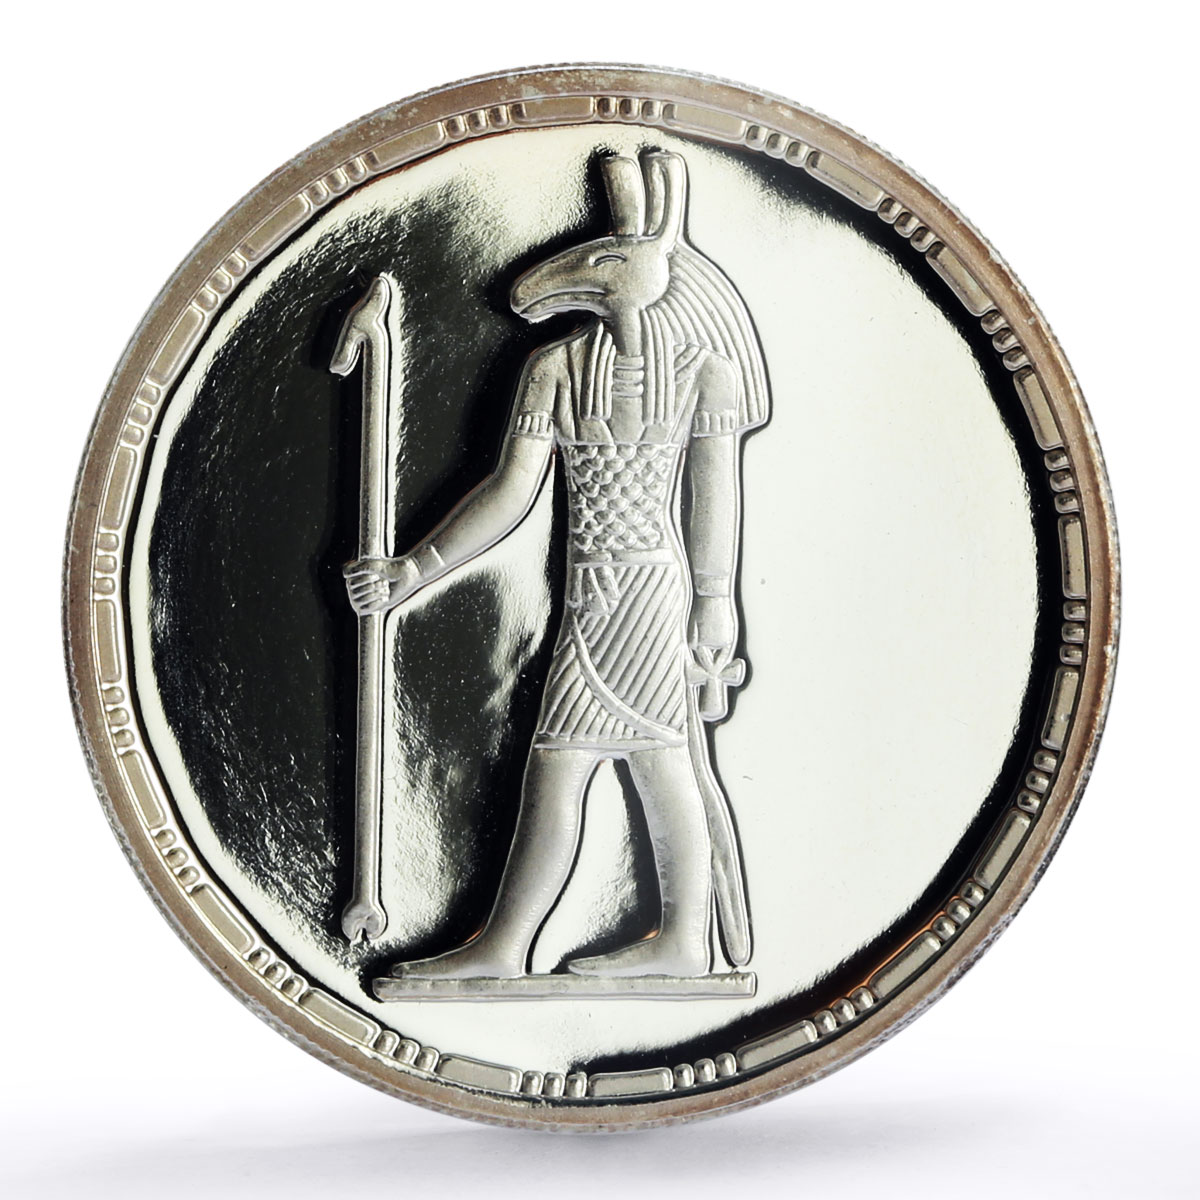 Egypt 5 pounds Treasures Standing God Seth Sculpture PR69 PCGS silver coin 1994